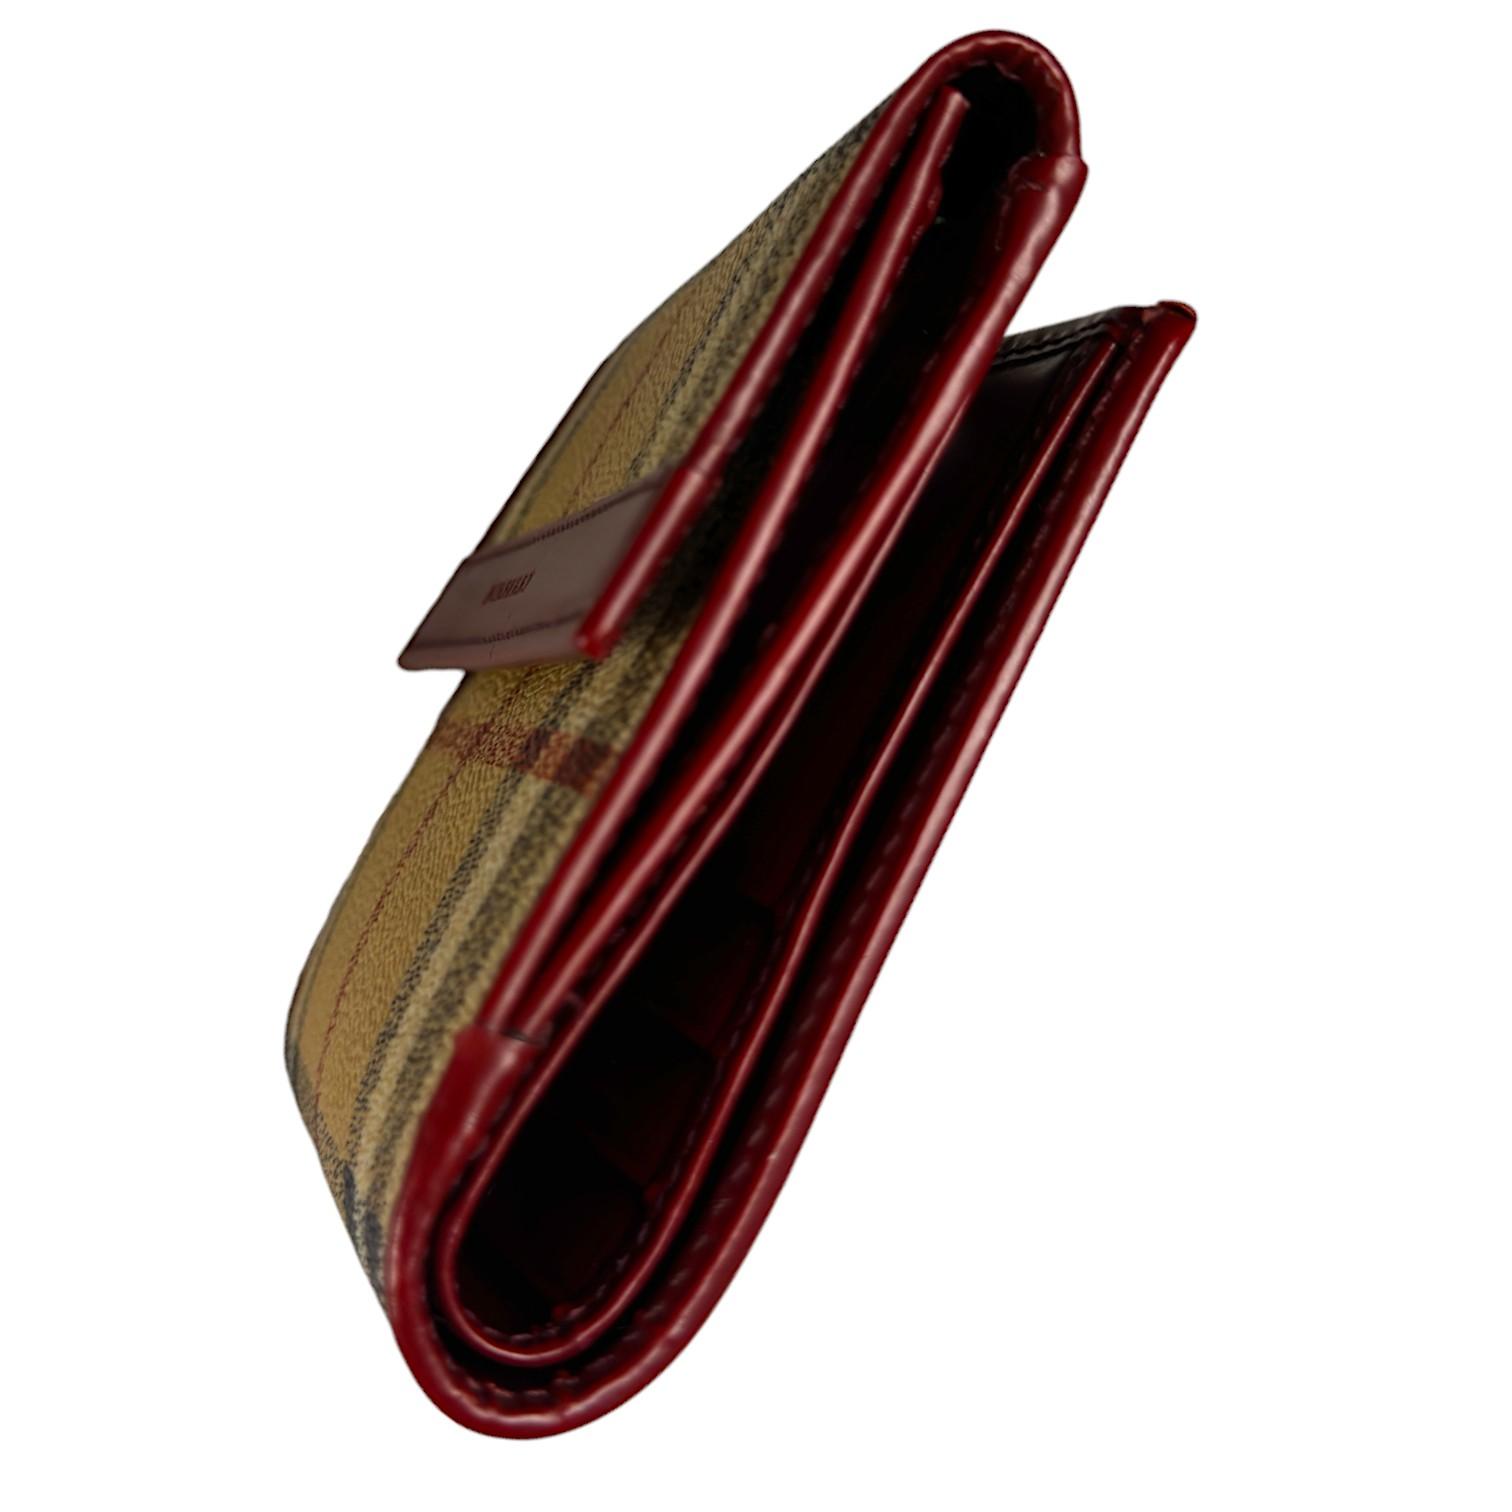 Authentic estate Burberry Nova Check Canvas Burgundy leather trifold wallet